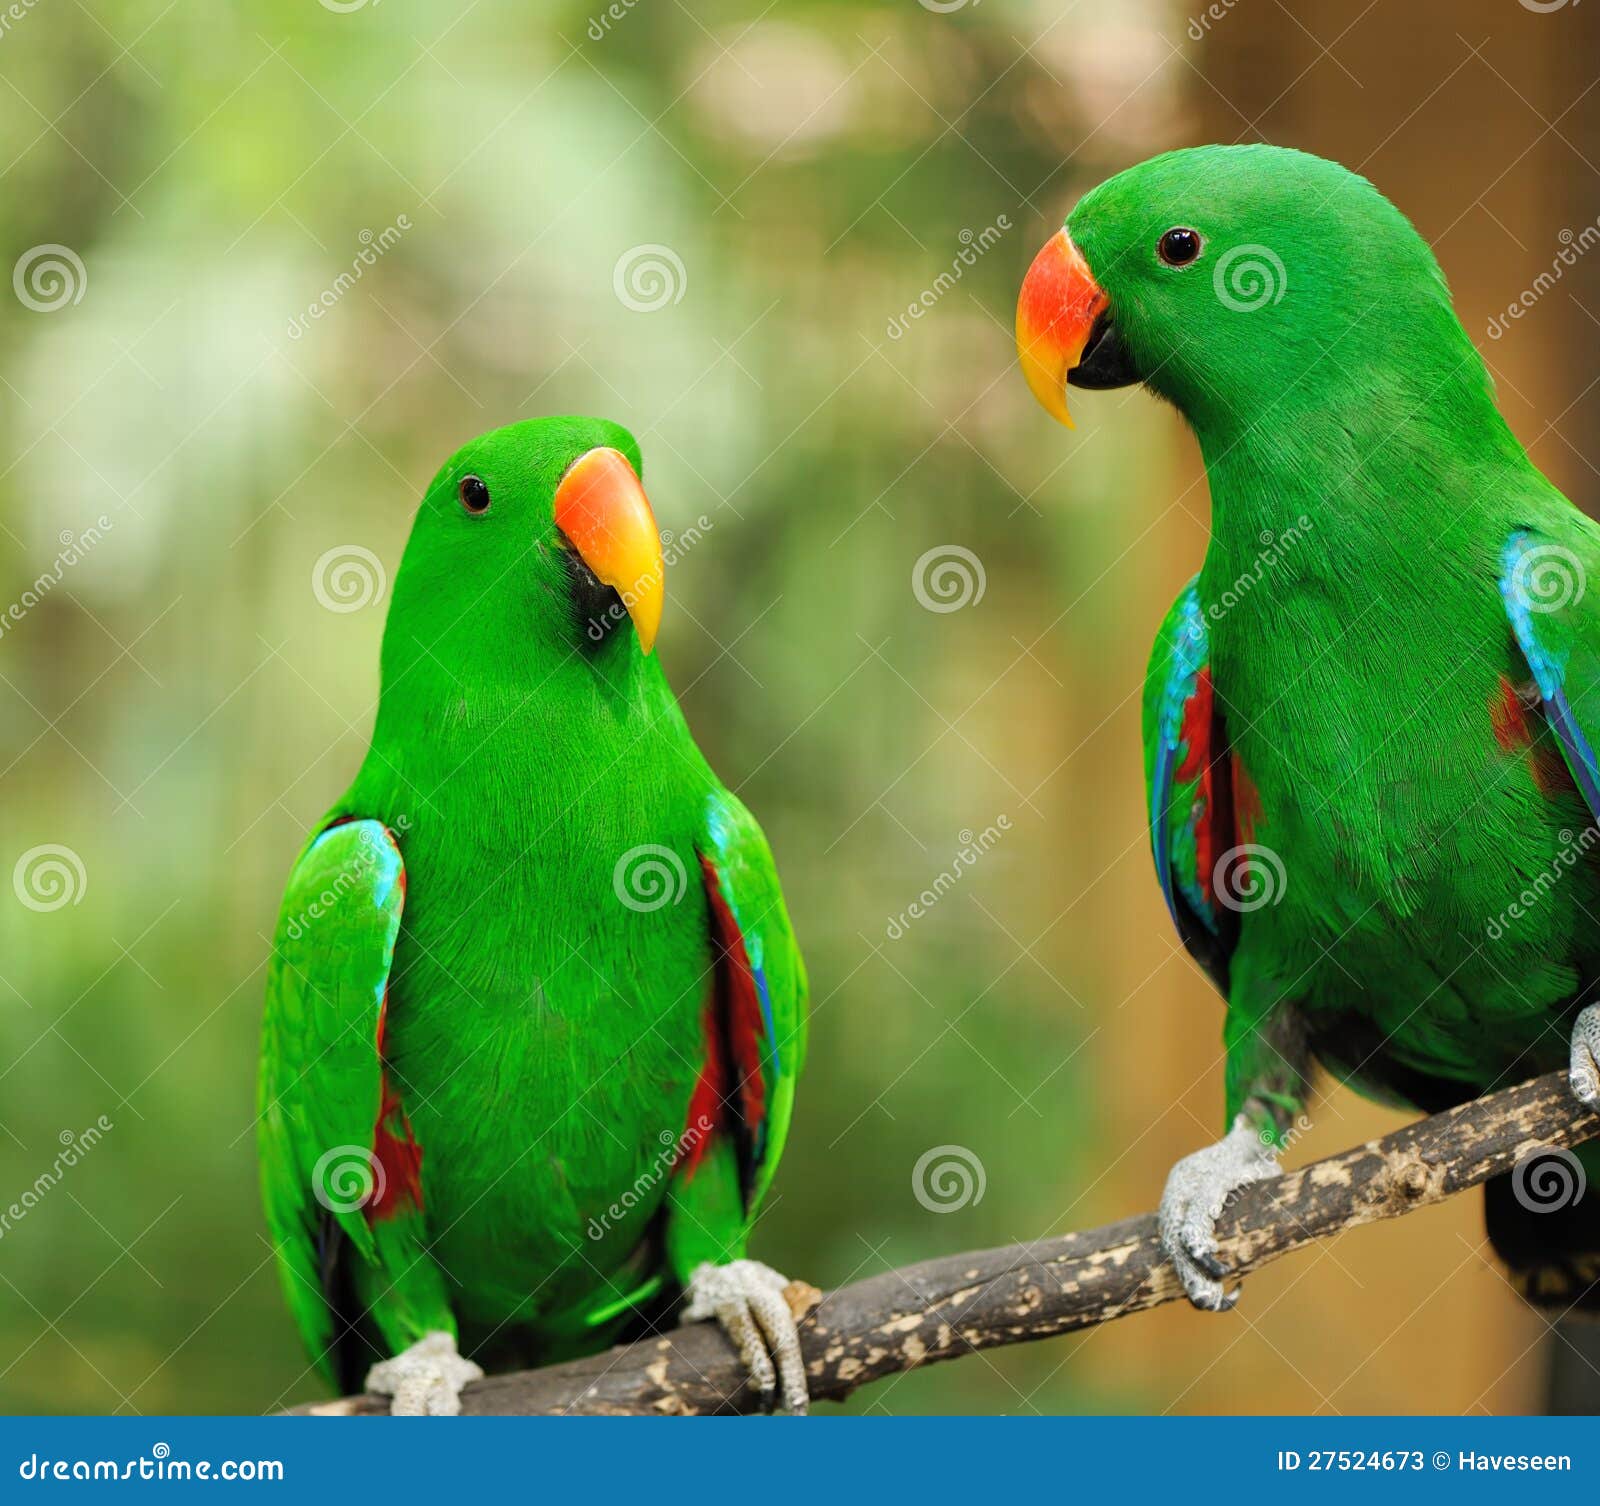 4,255 Couple Green Parrot Stock Photos - Free & Royalty-Free Stock ...